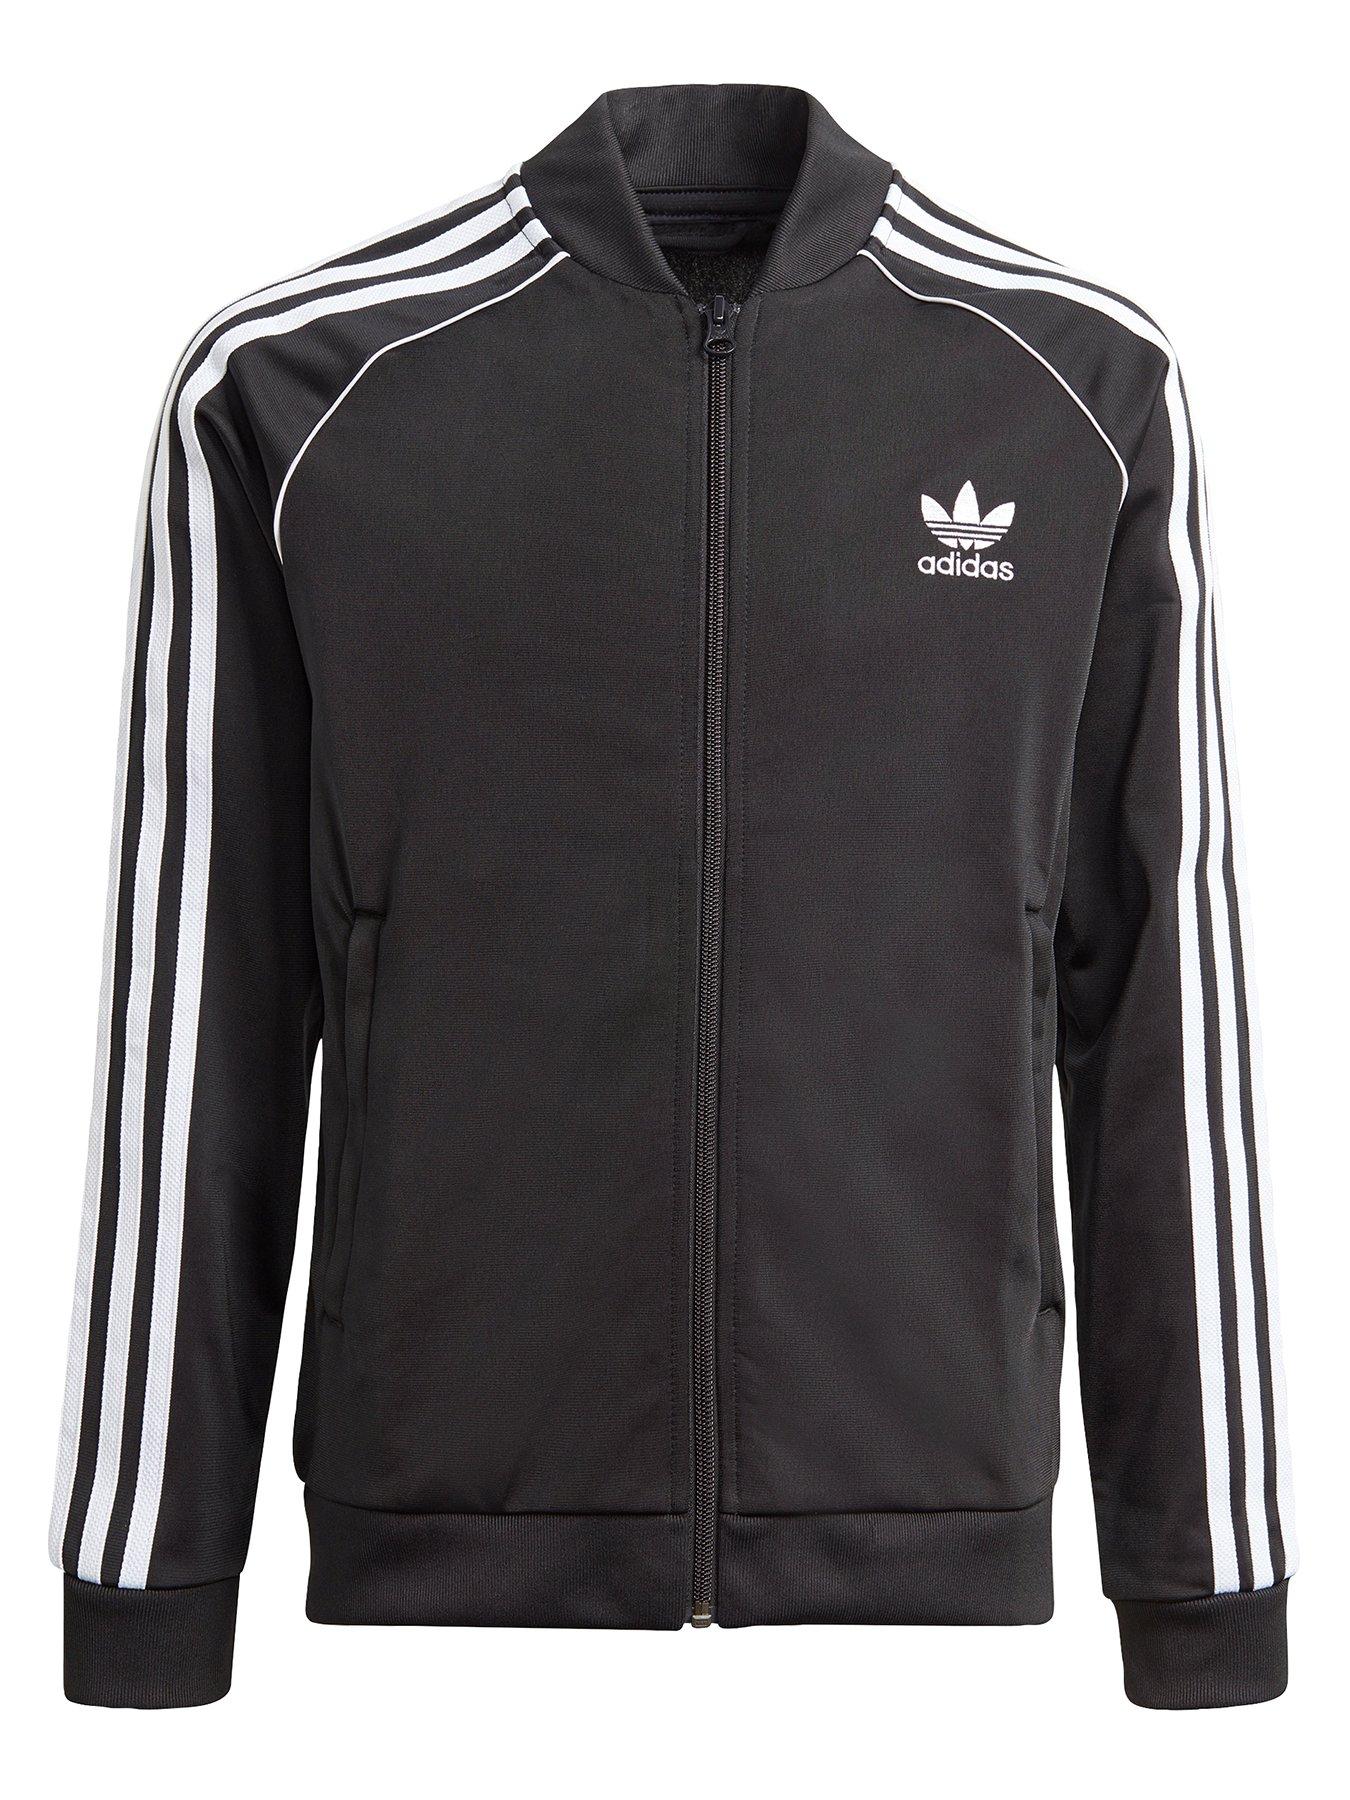 Adidas | Coats \u0026 jackets | Boys clothes 